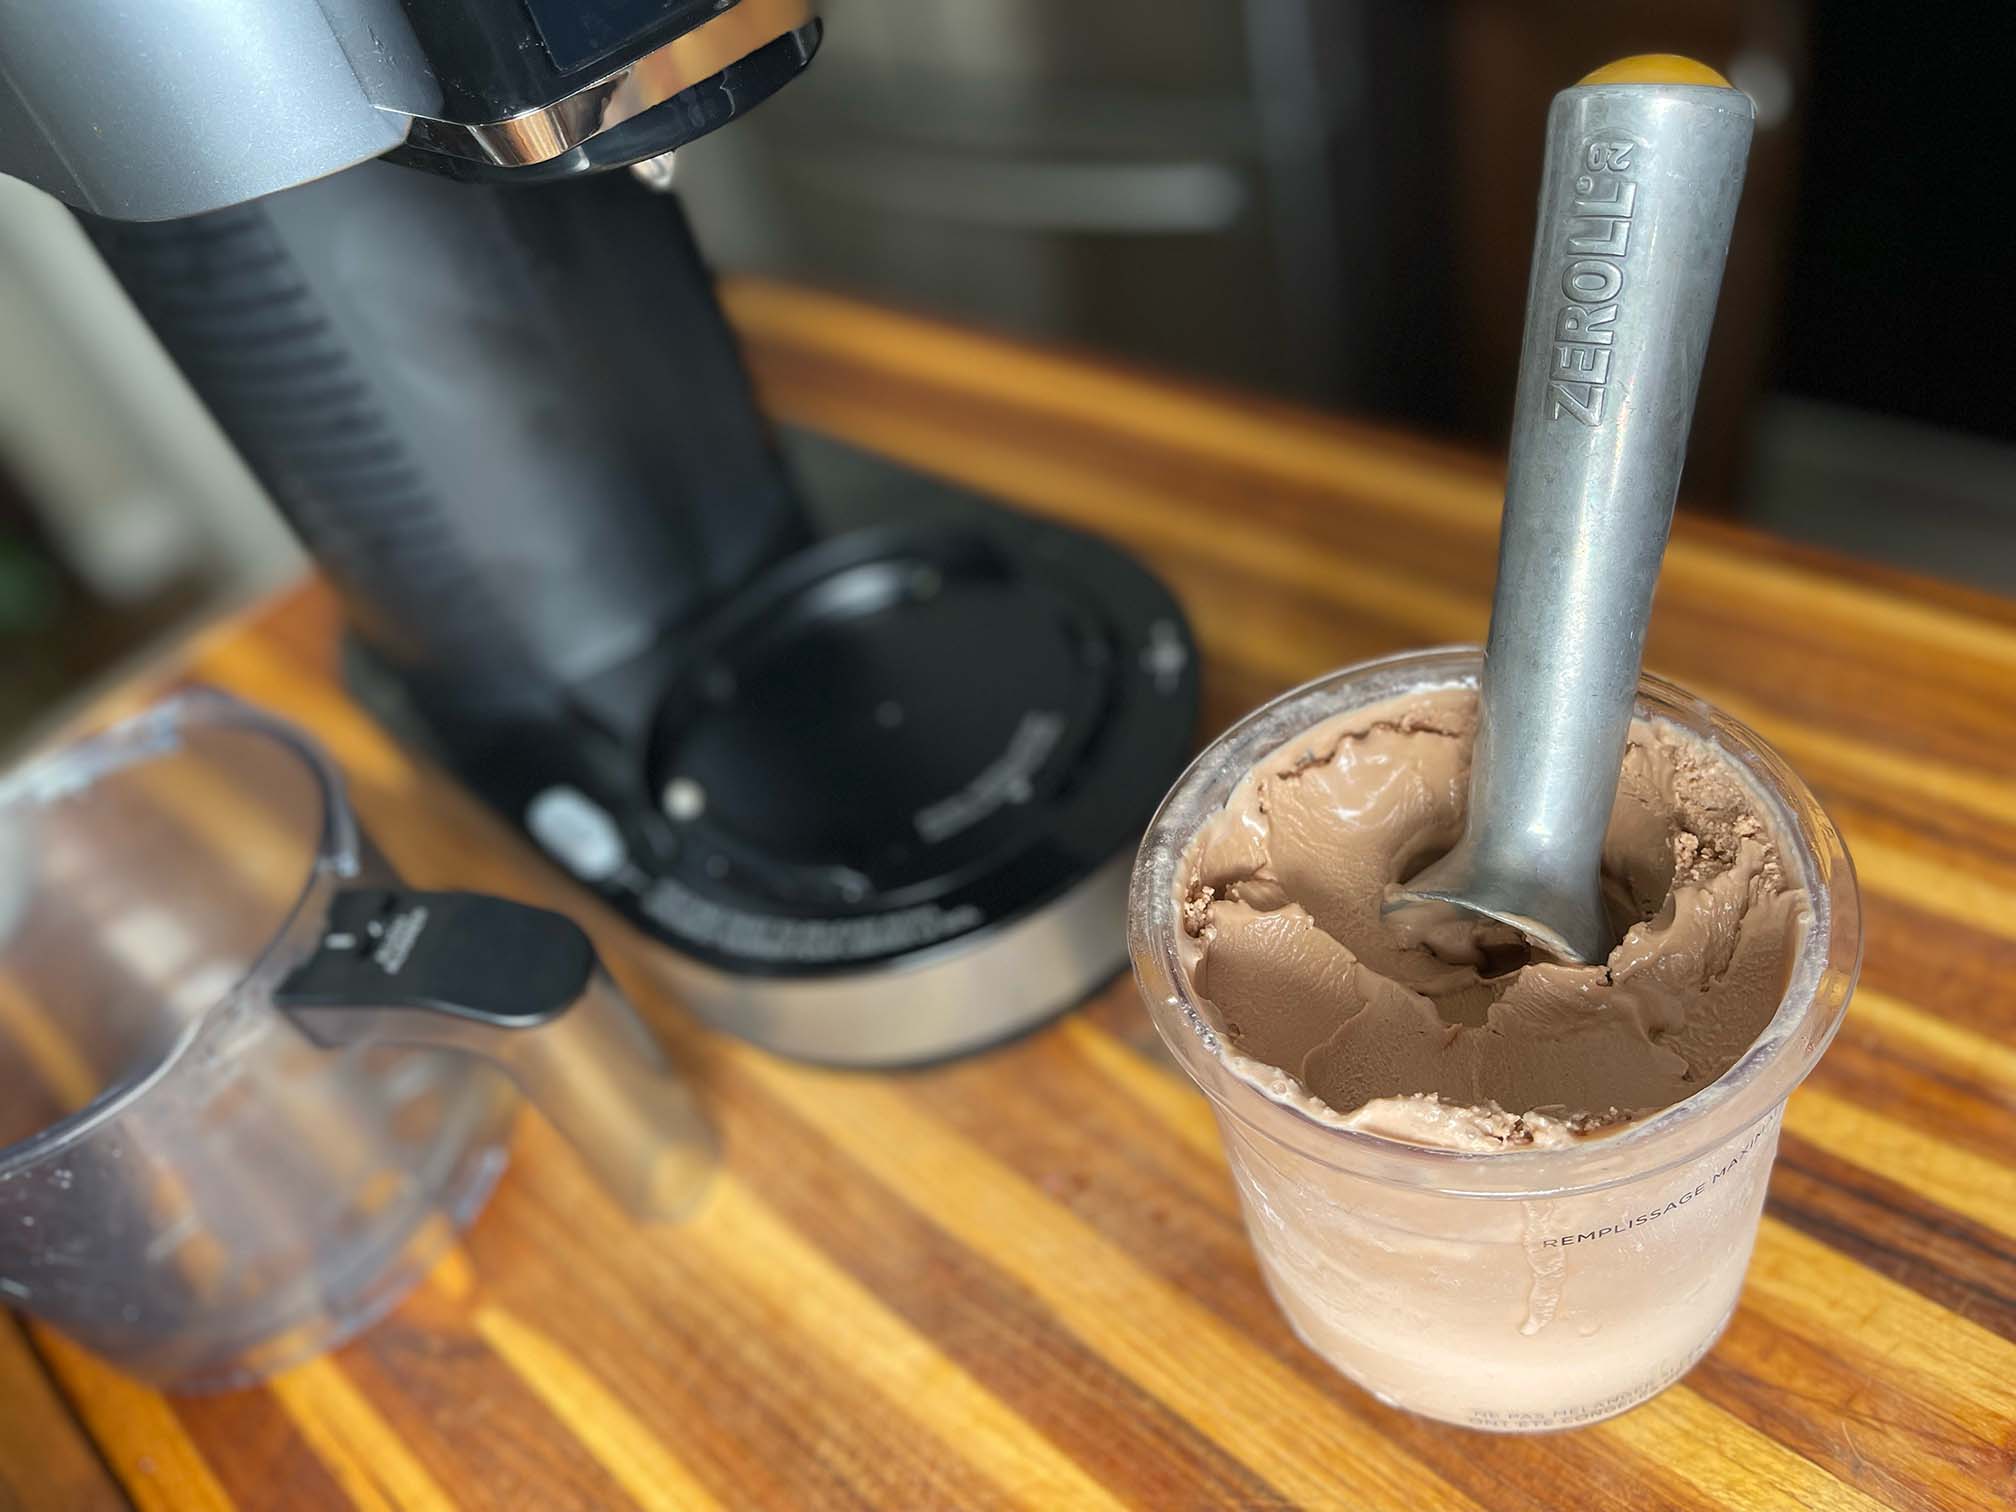 Ninja CREAMi Breeze Ice Cream, Gelato, Milkshake, Sorbet, Smoothie Bowl &  Lite Ice Cream Maker, 7 One-Touch Programs & 4 Pints